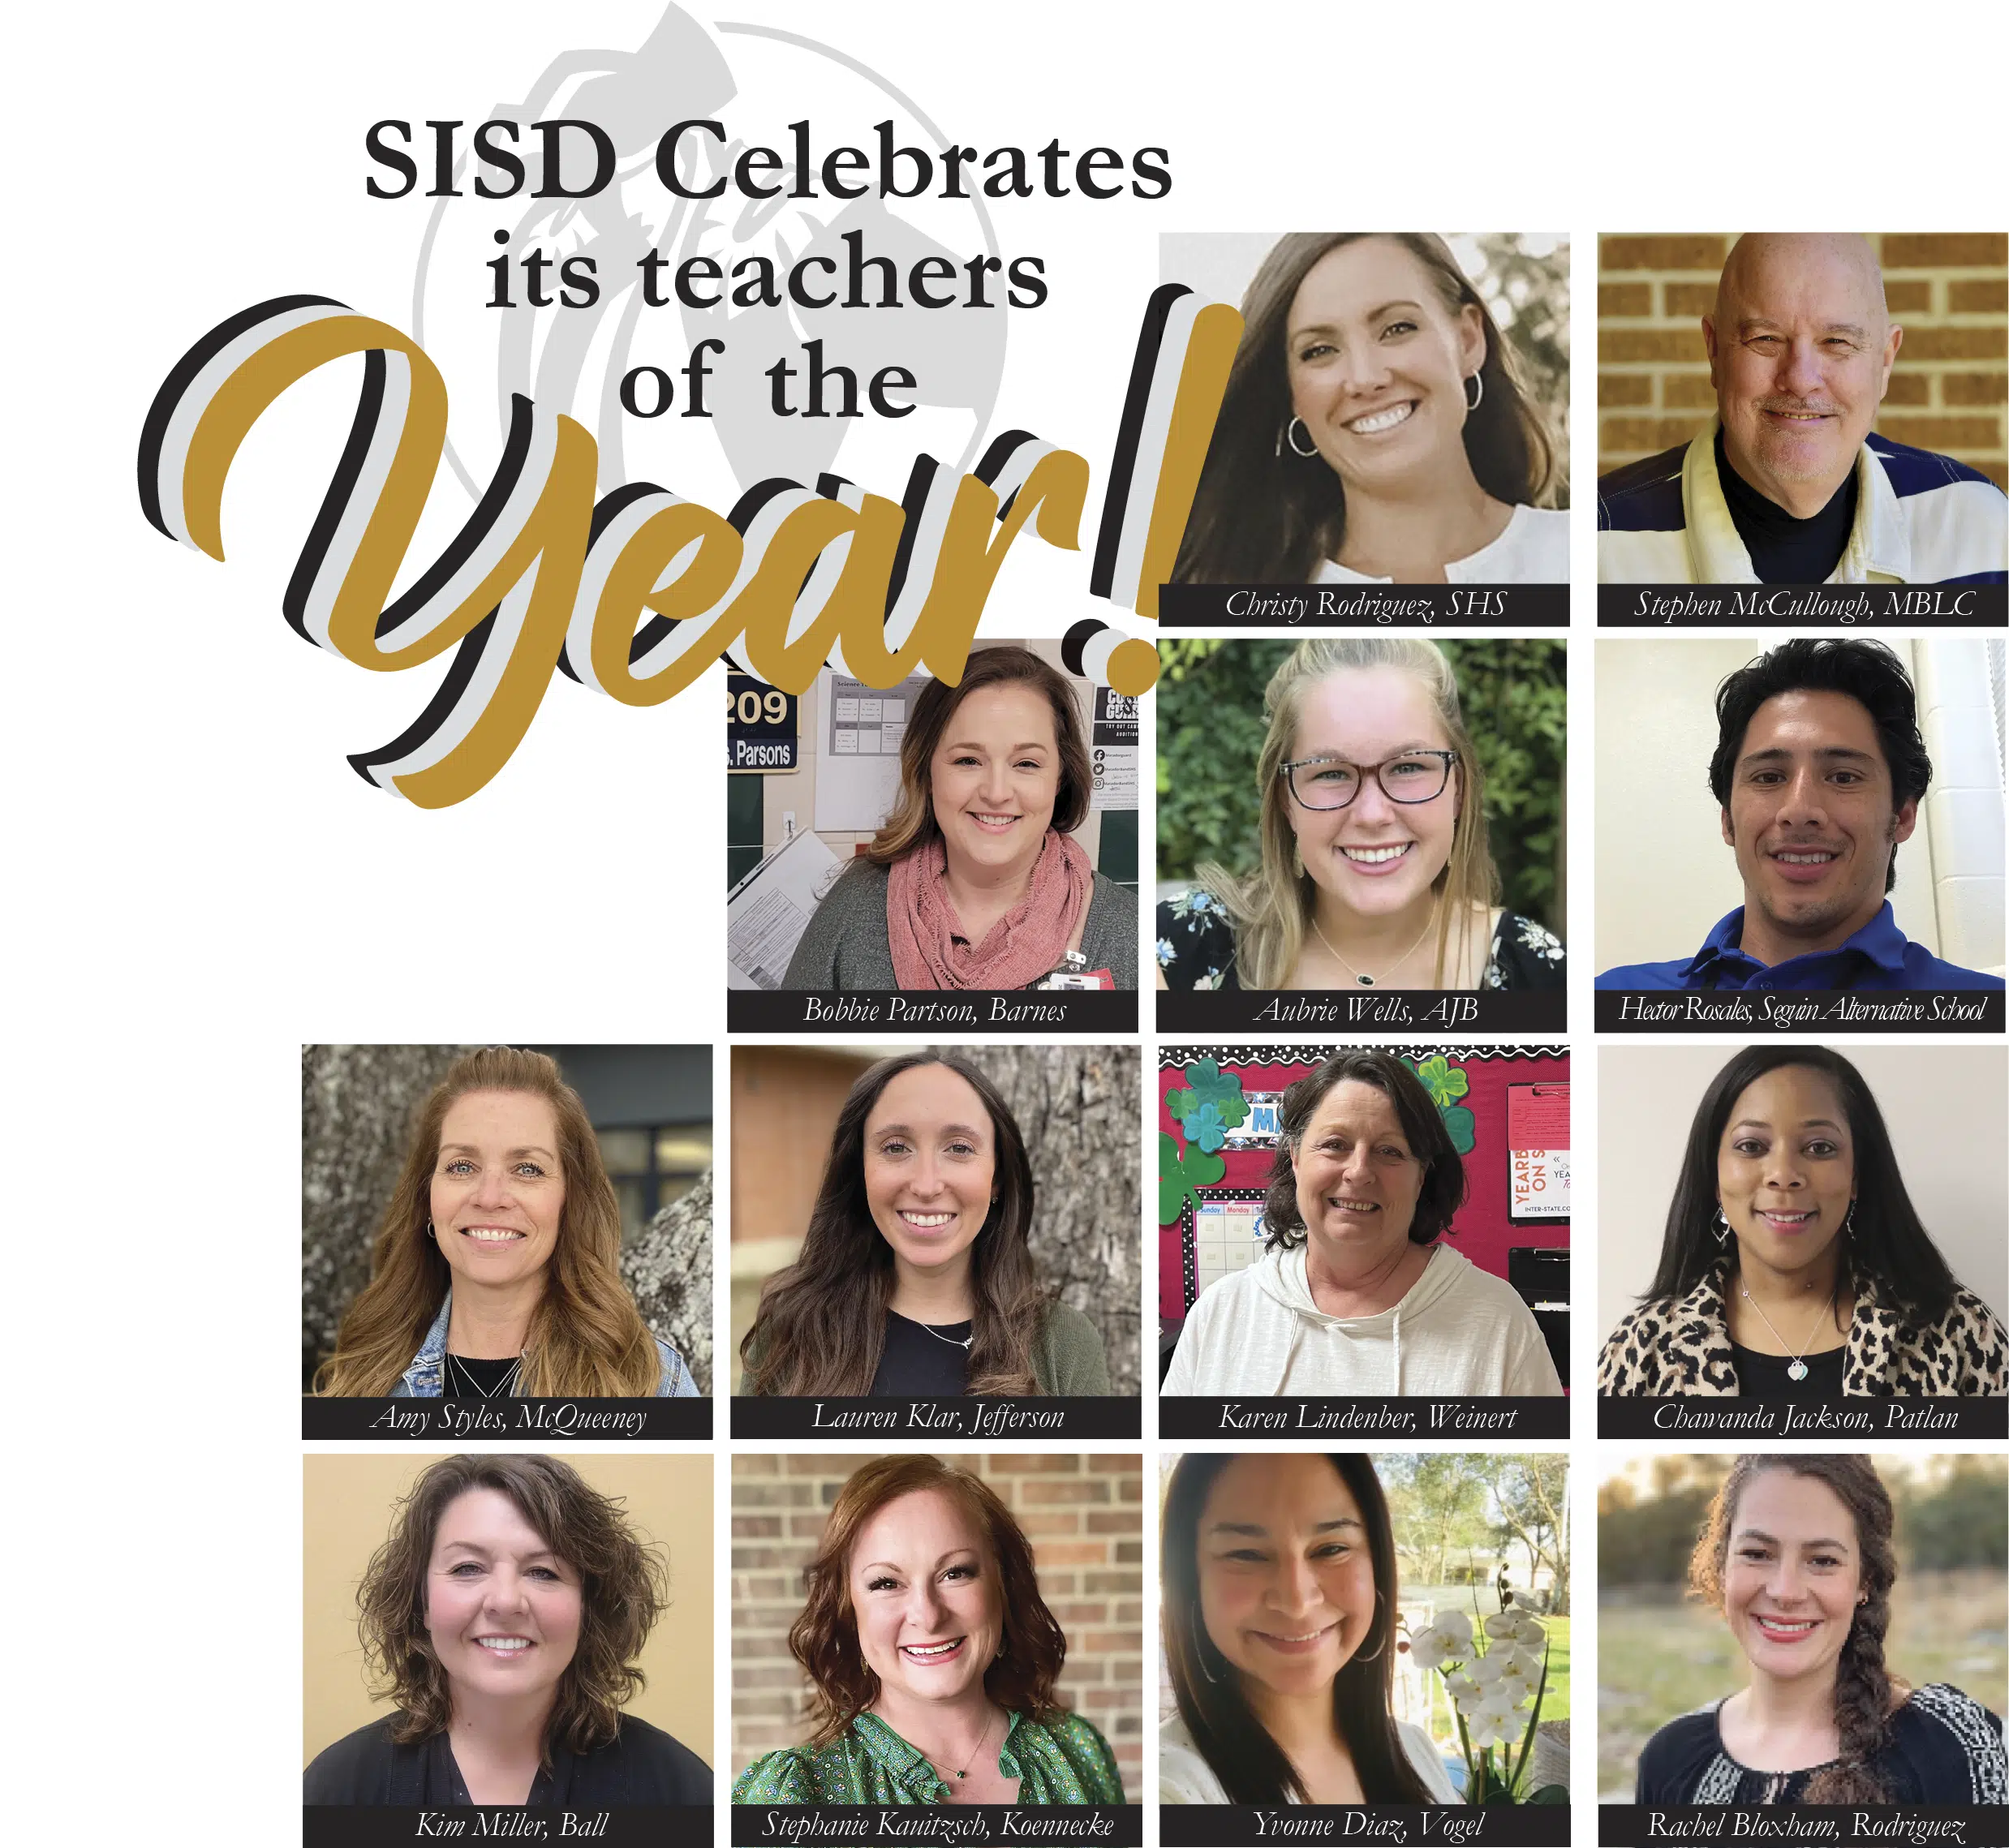 SISD celebrates its teachers of the year